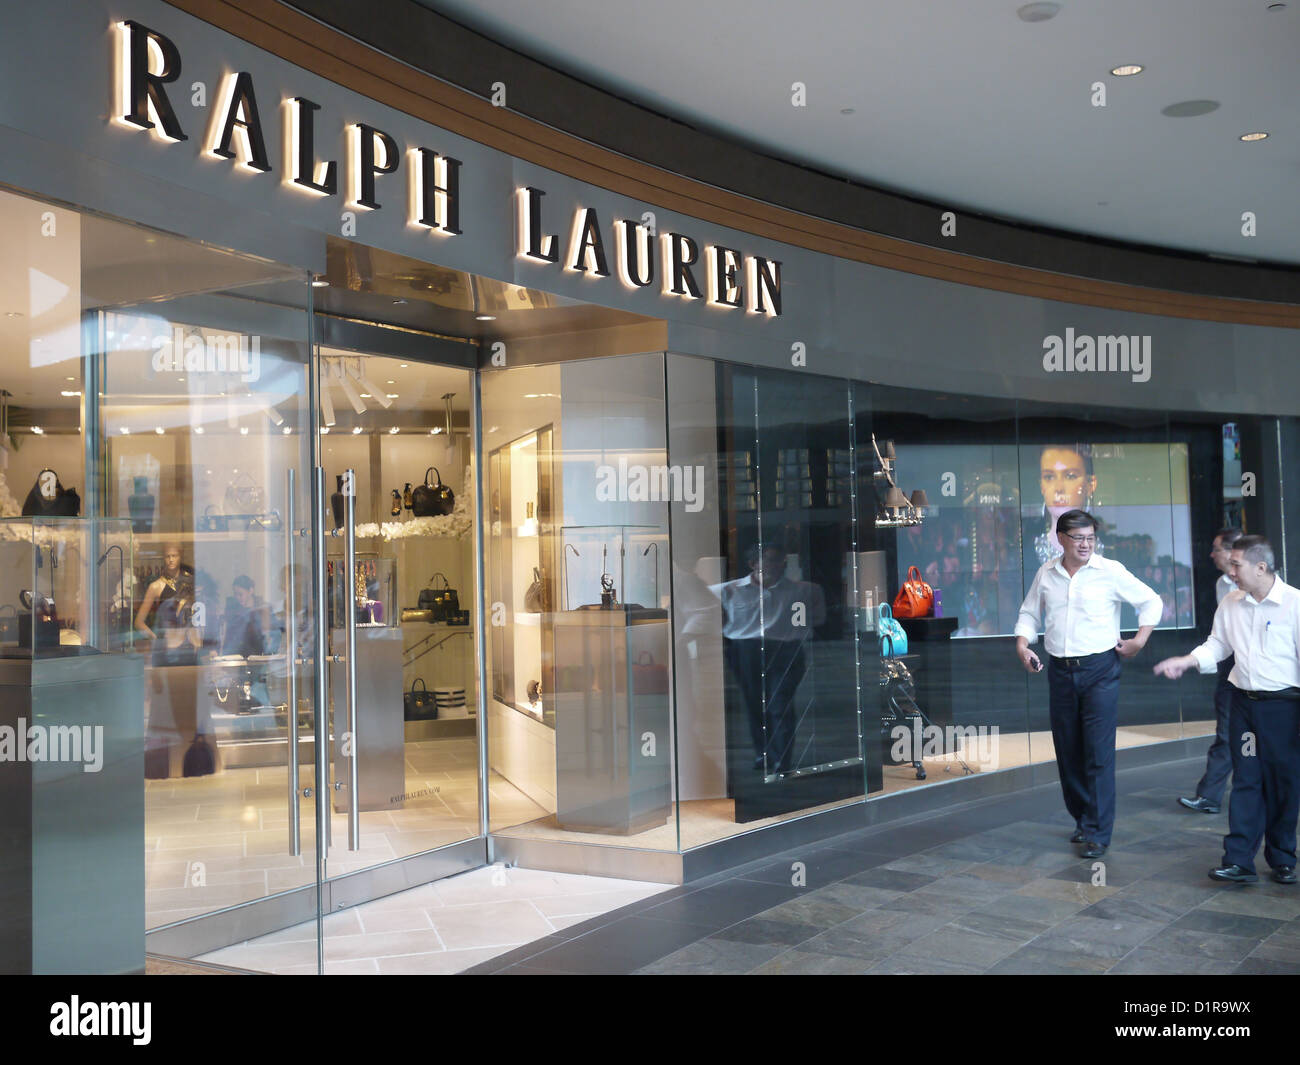 Ralph Lauren retail store Stock Photo - Alamy